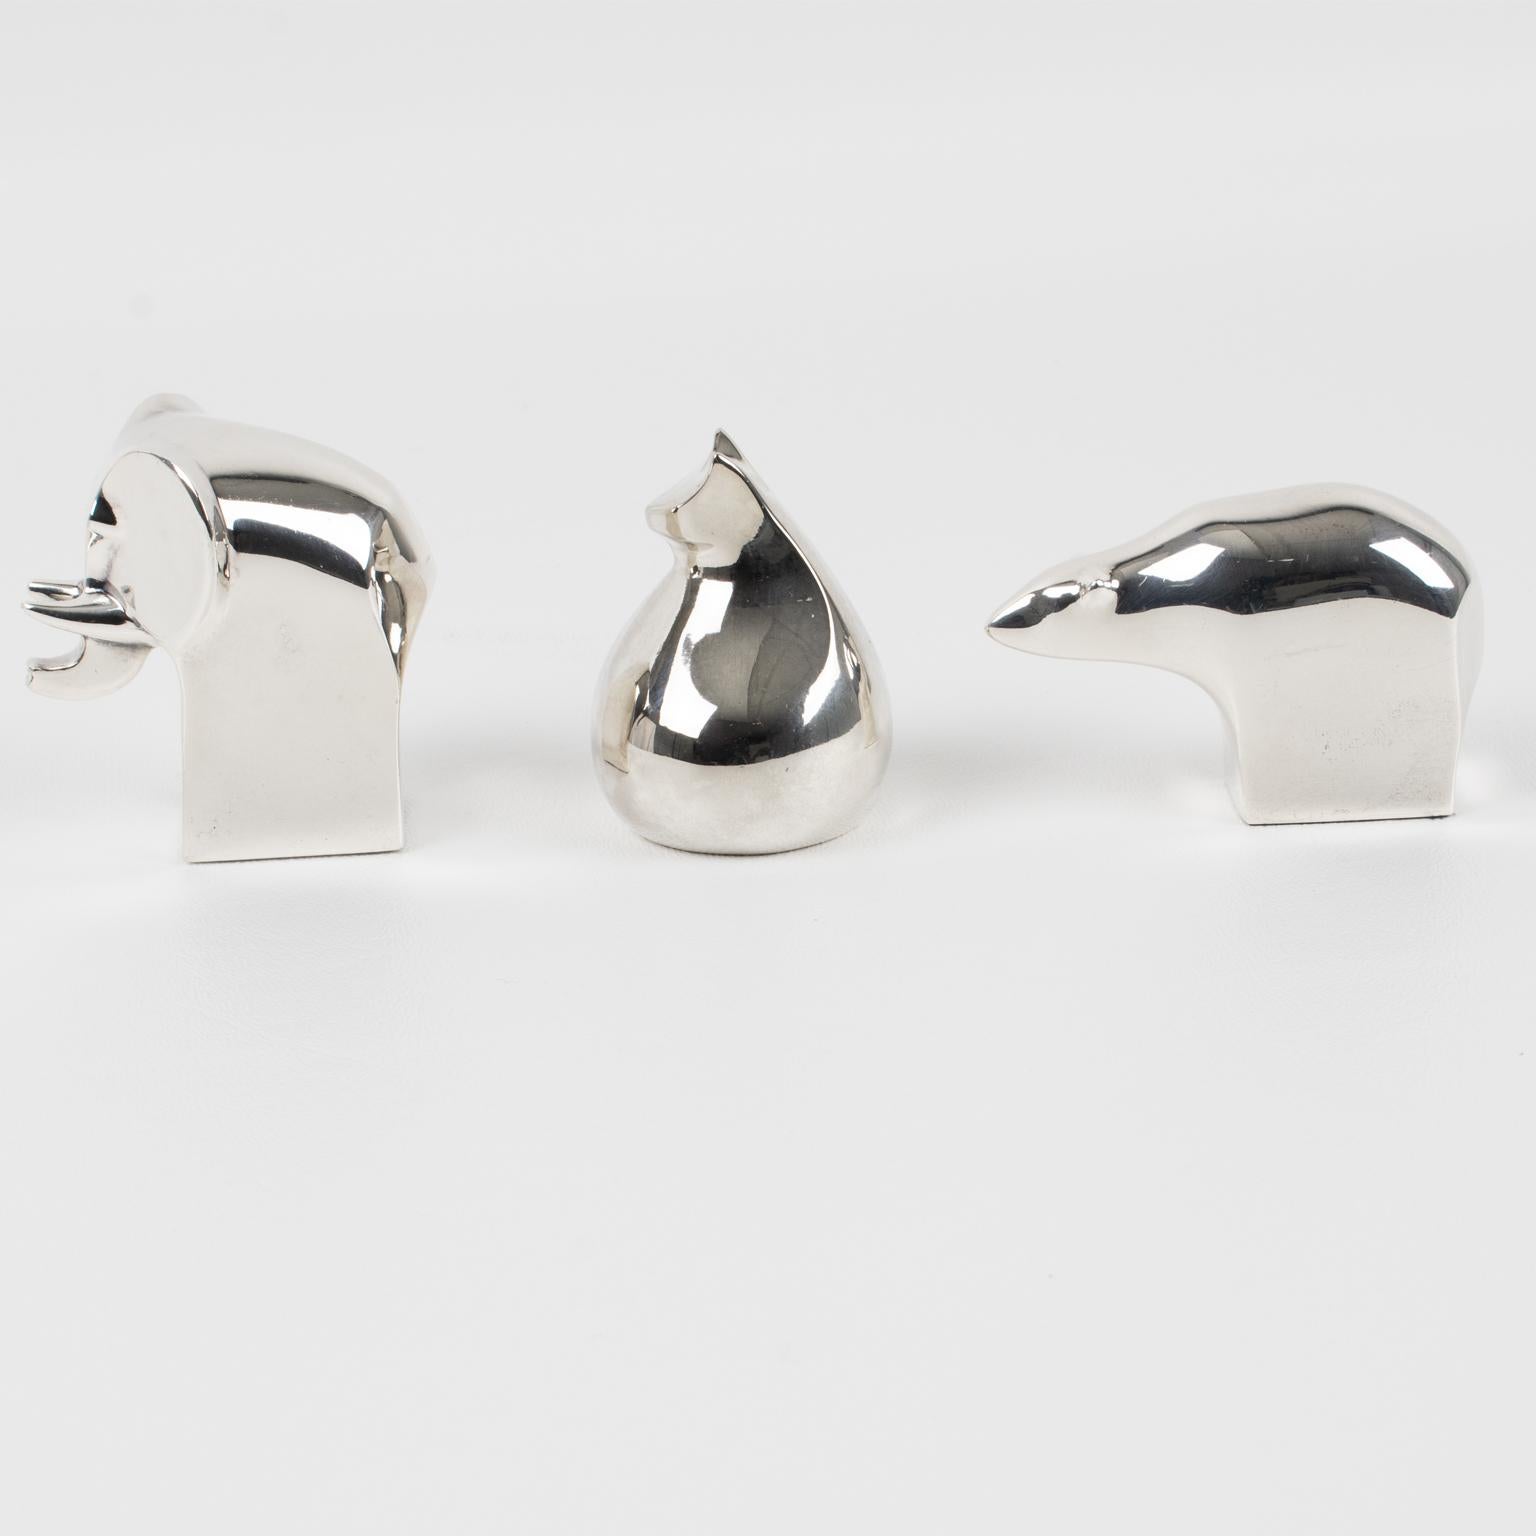 Danish Dansk Mid-Century Silver Plate Animal Figurine Paperweight, trio by Gunnar Cyren